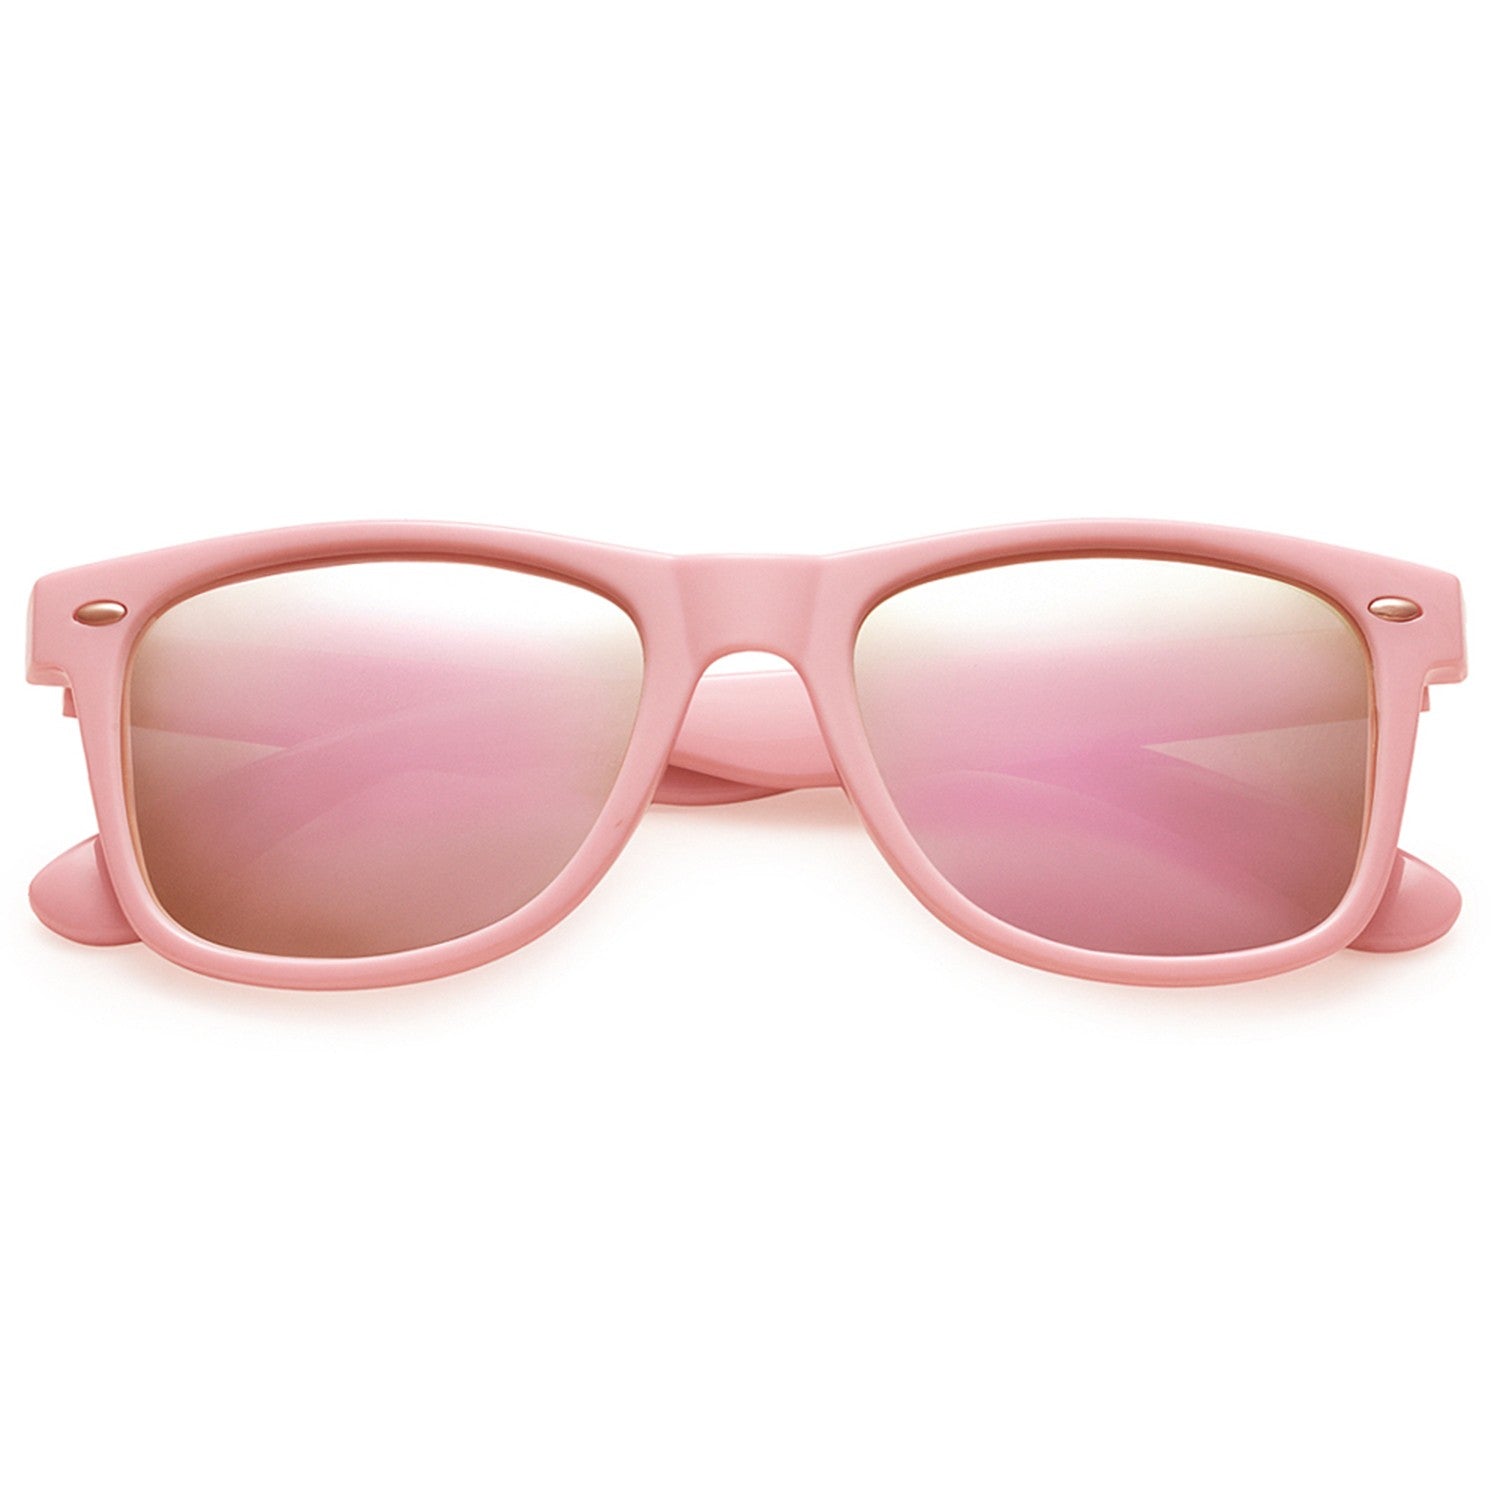 Polarspex Polarized 80's Retro Style Unisex Sunglasses with Princess Pink Frames and Pink Quartz Lenses